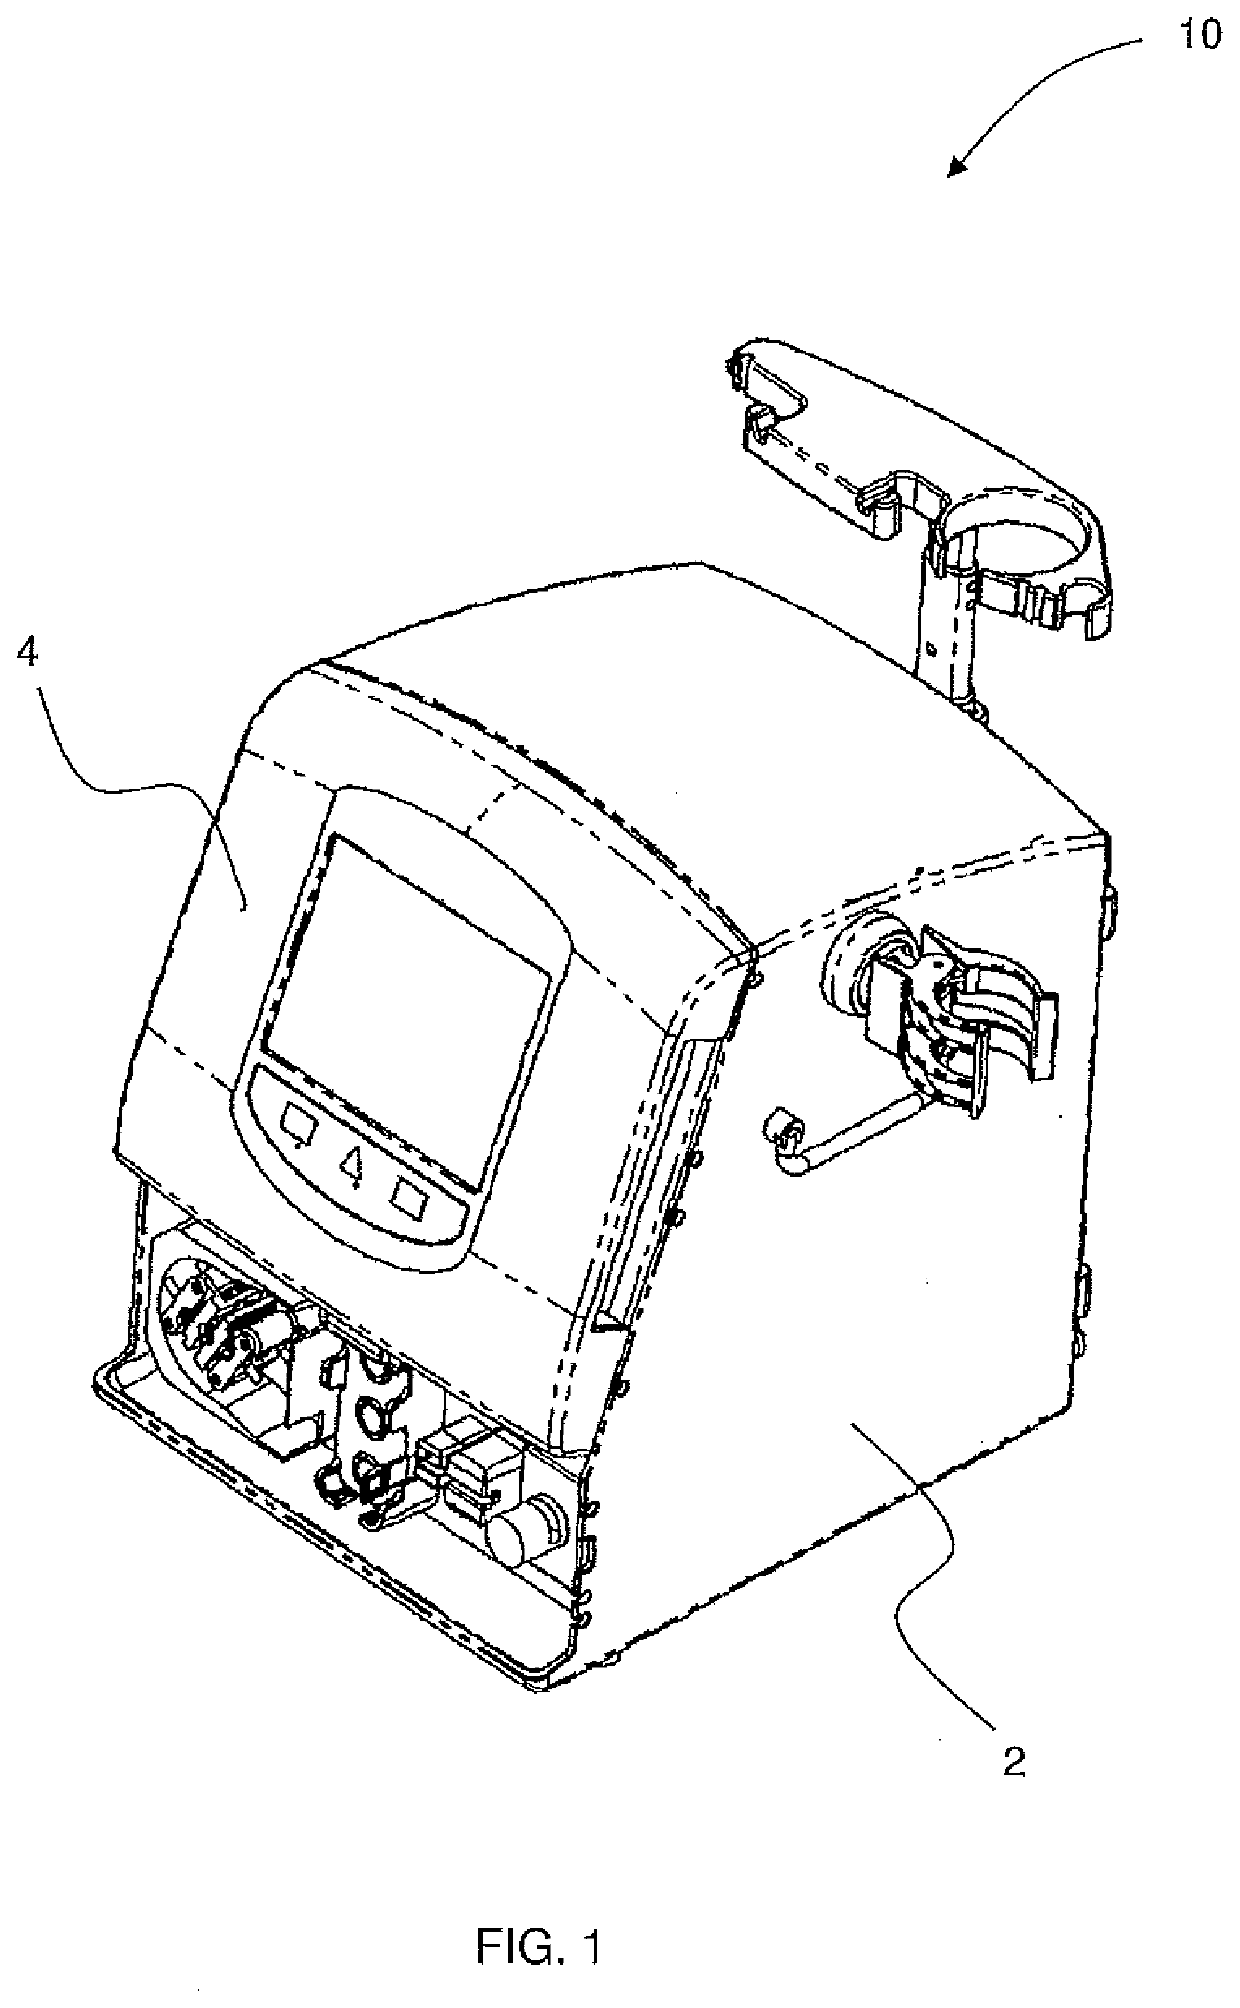 A dialysis machine